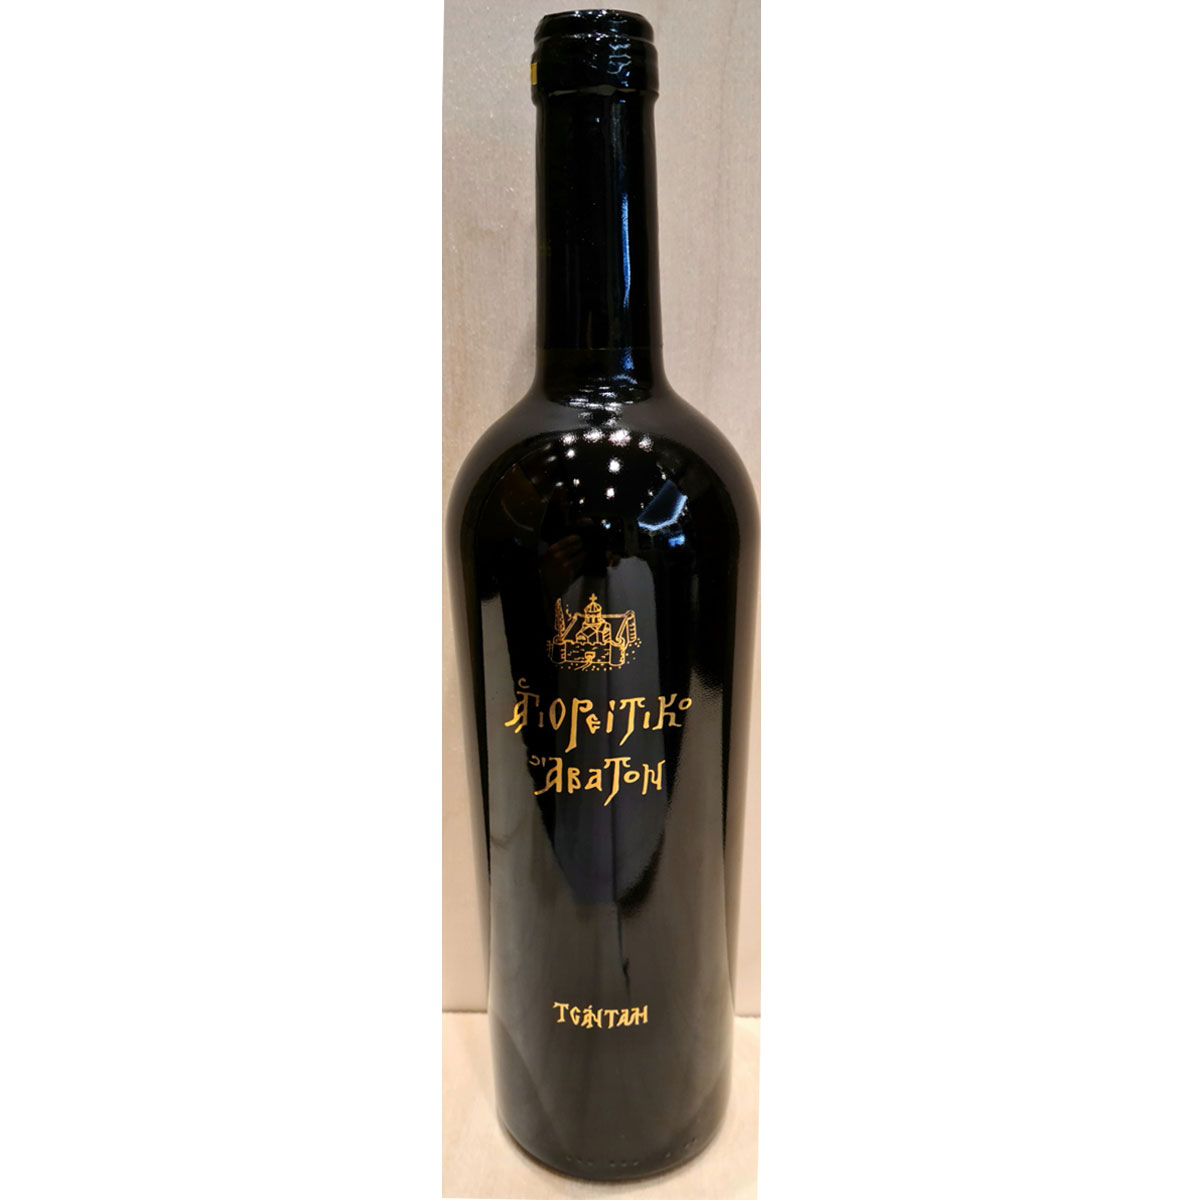 a bottle of agioritiko avaton tsantali 2003